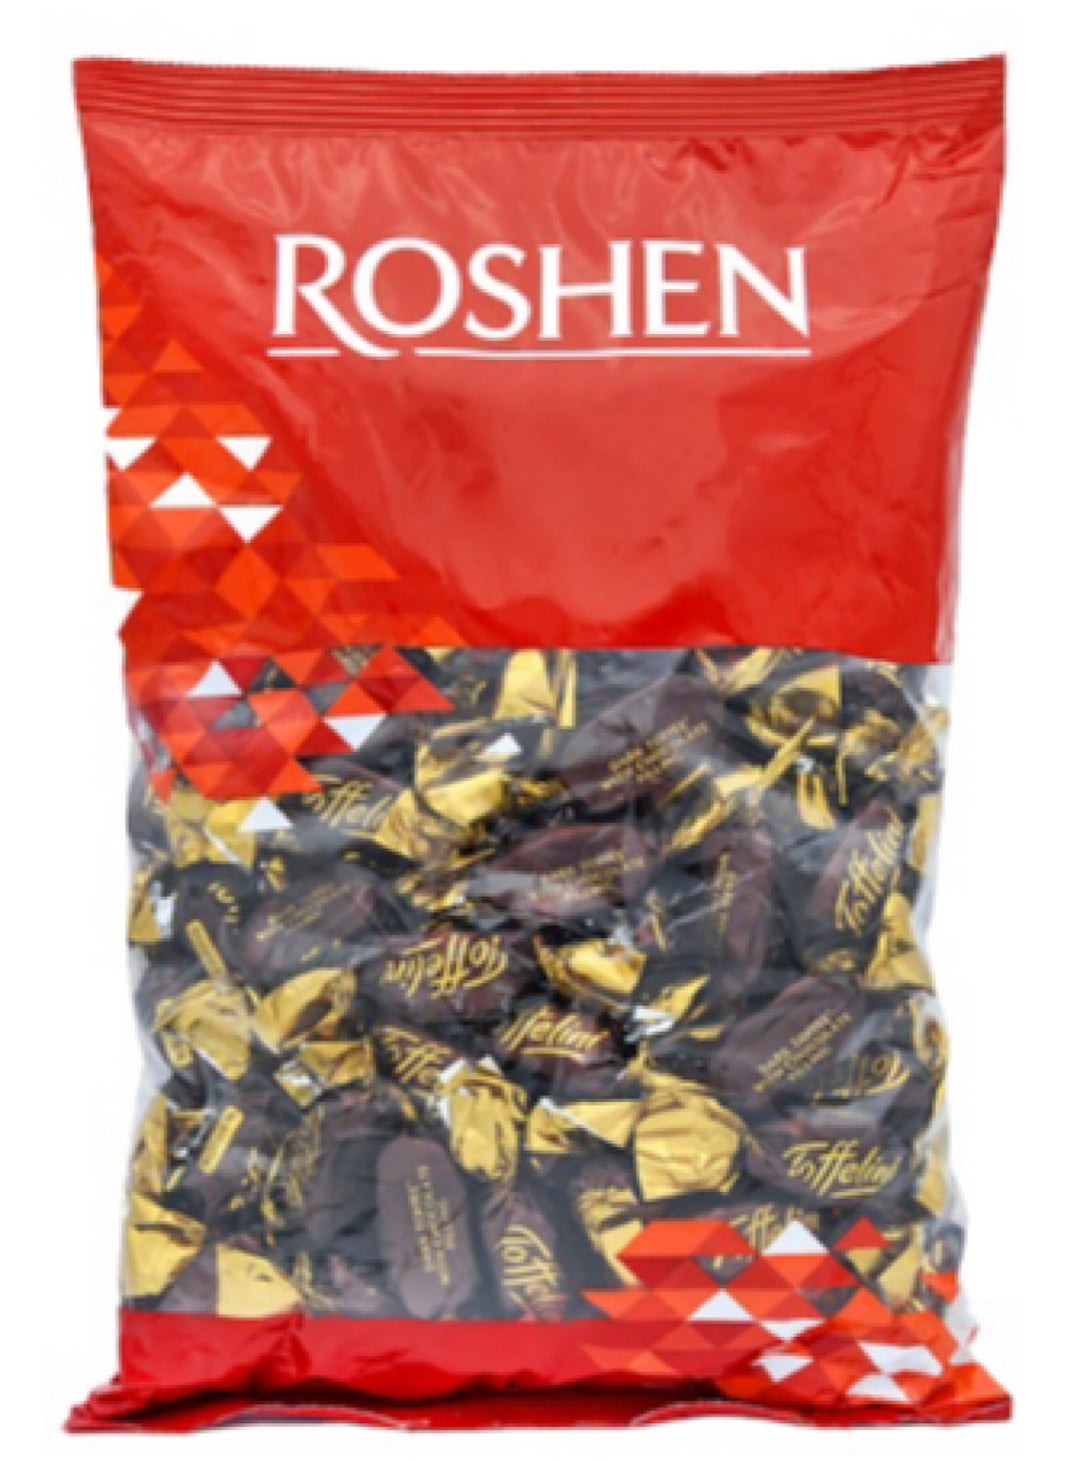 Toffelini Chocolate Toffee - Roshen